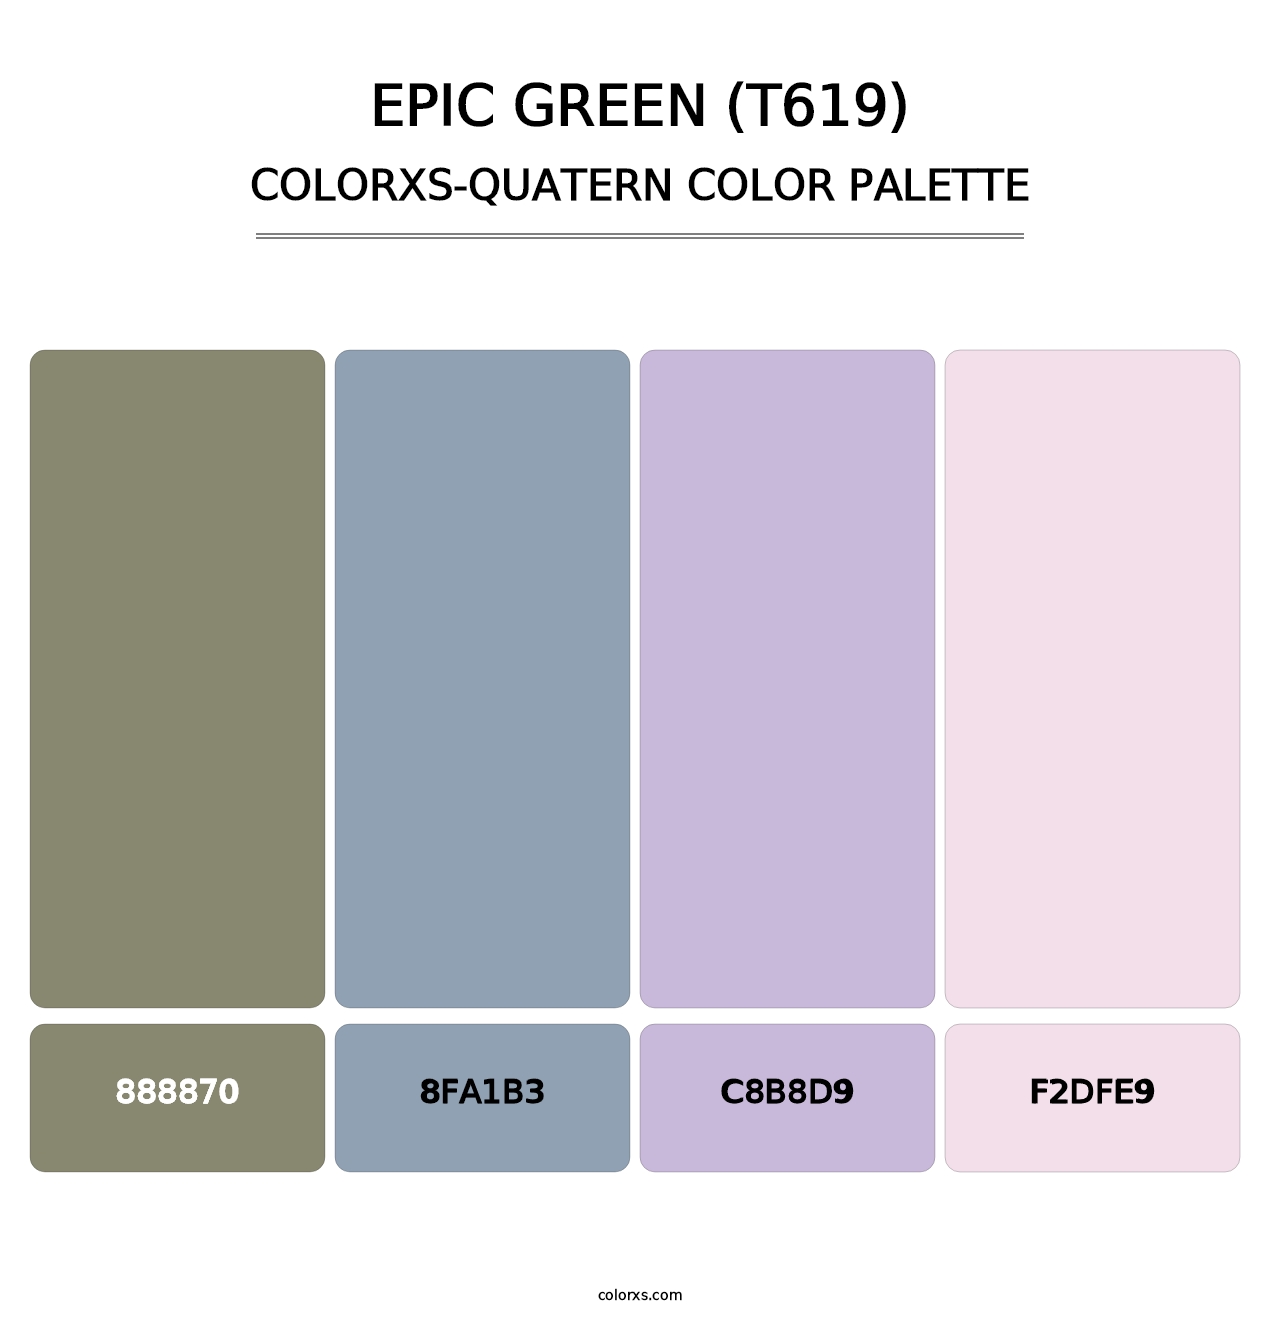 Epic Green (T619) - Colorxs Quatern Palette